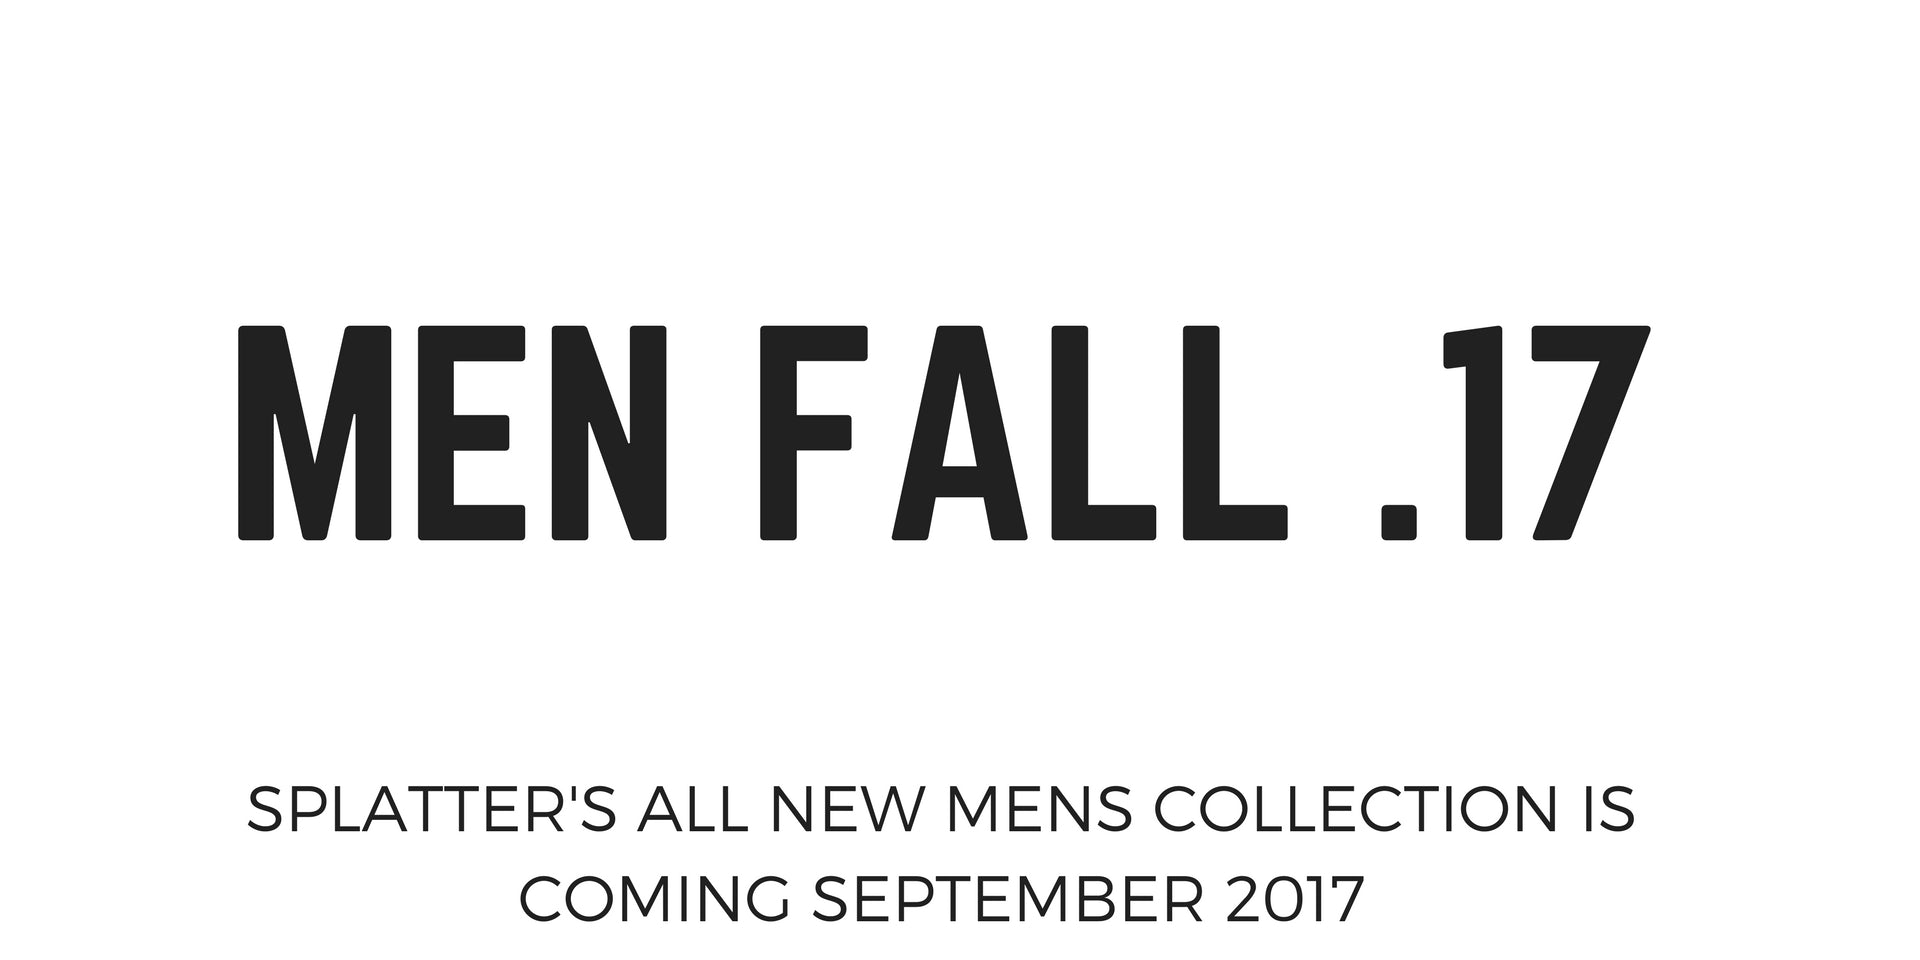 Splatter's Mens Collection Coming September 2017